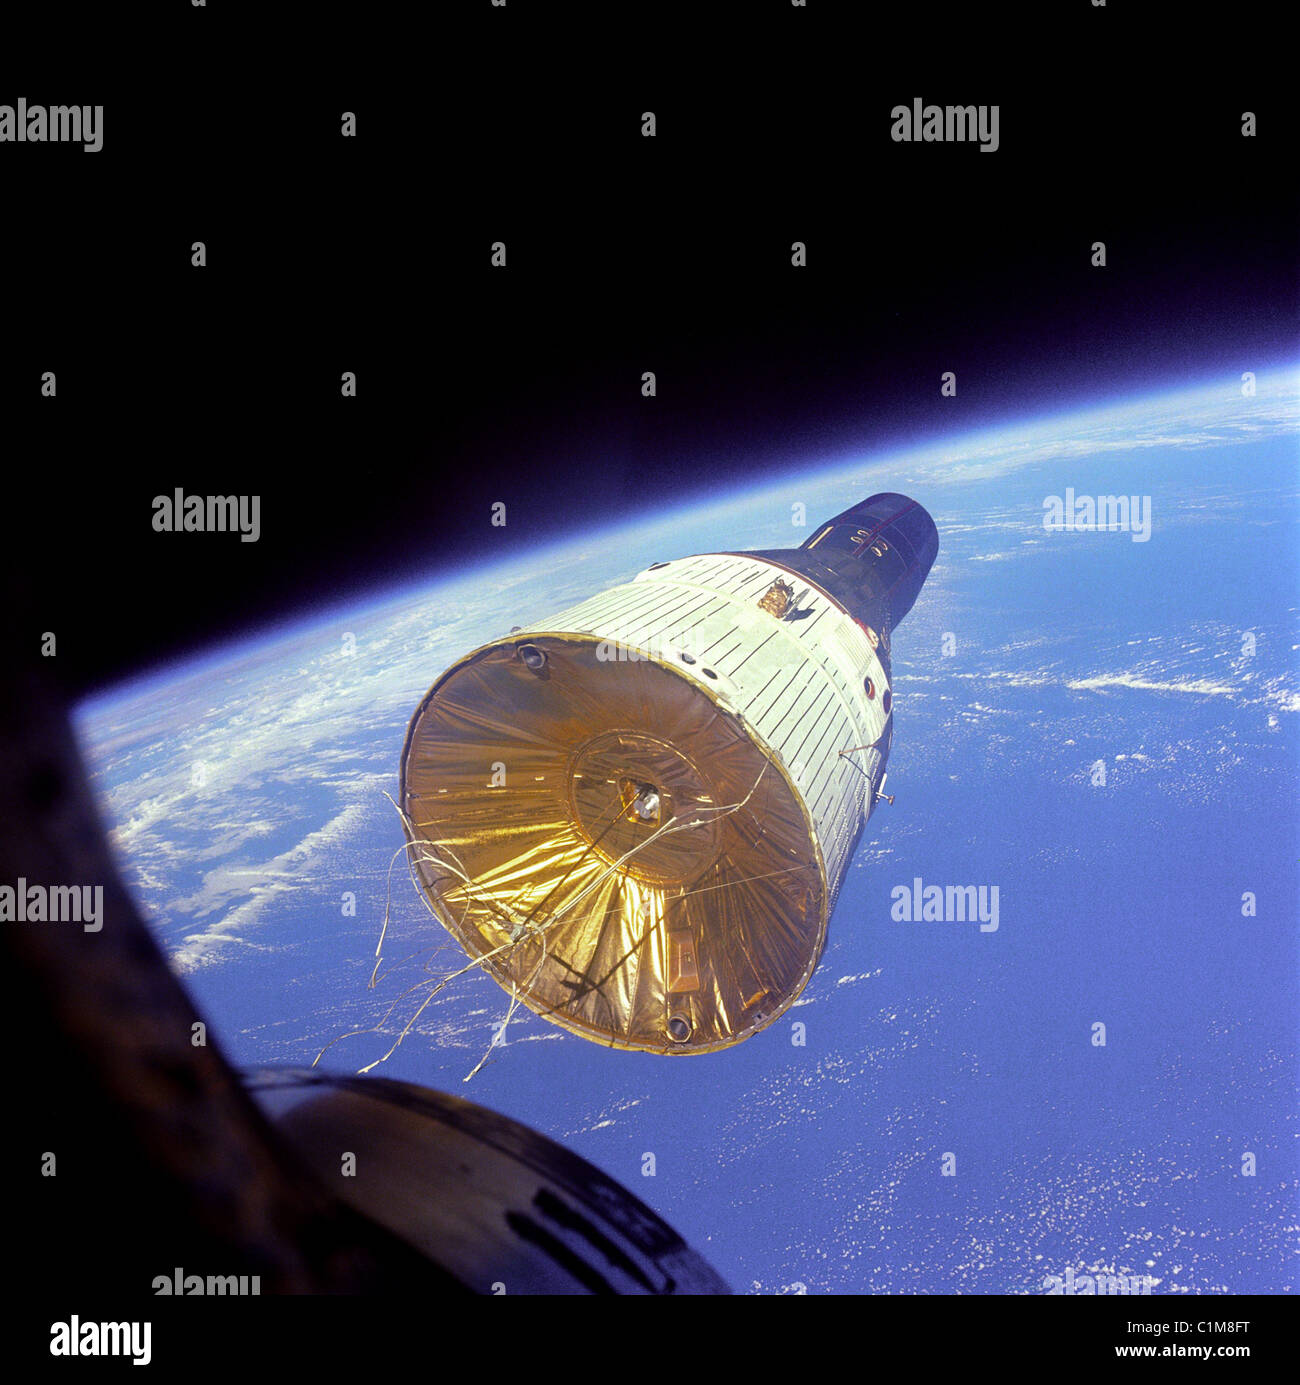 Gemini VII, Gemini 7 orbiting Earth. Stock Photo